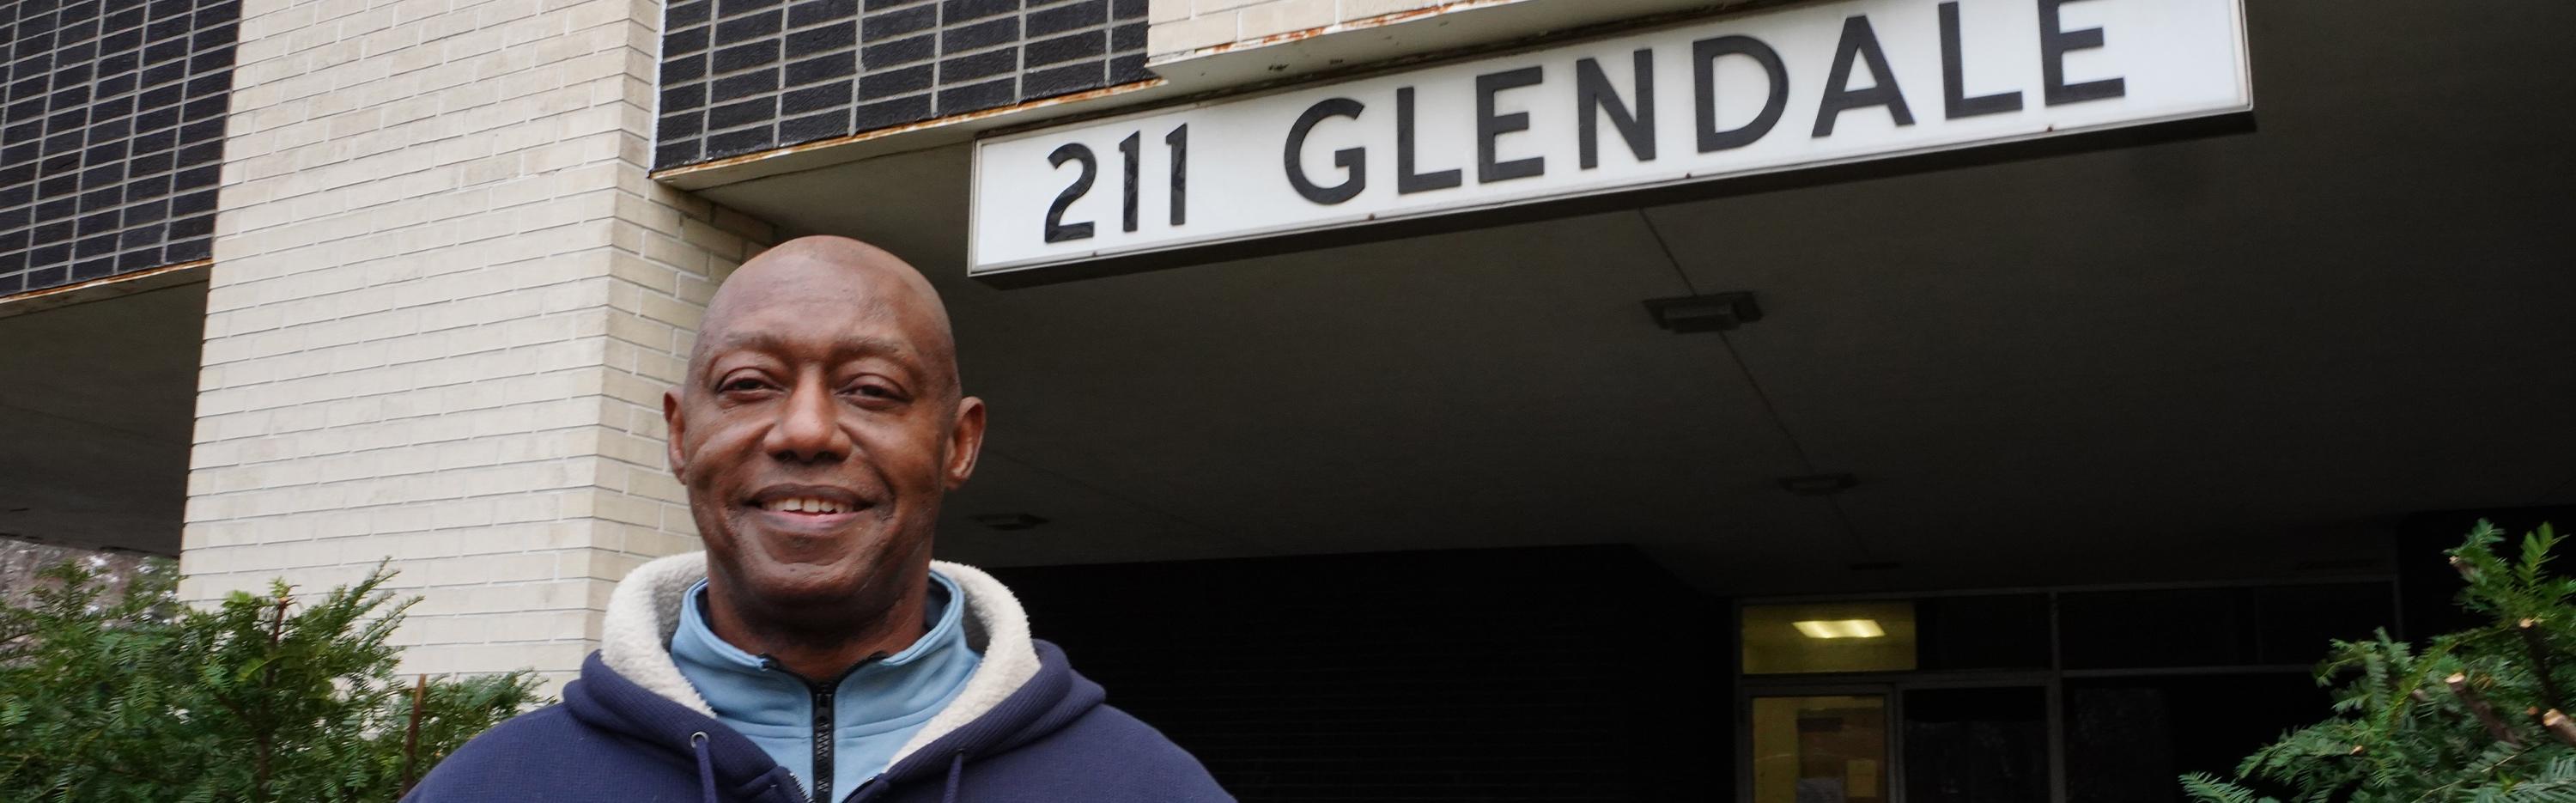 211 Glendale Veteran Housing Facility